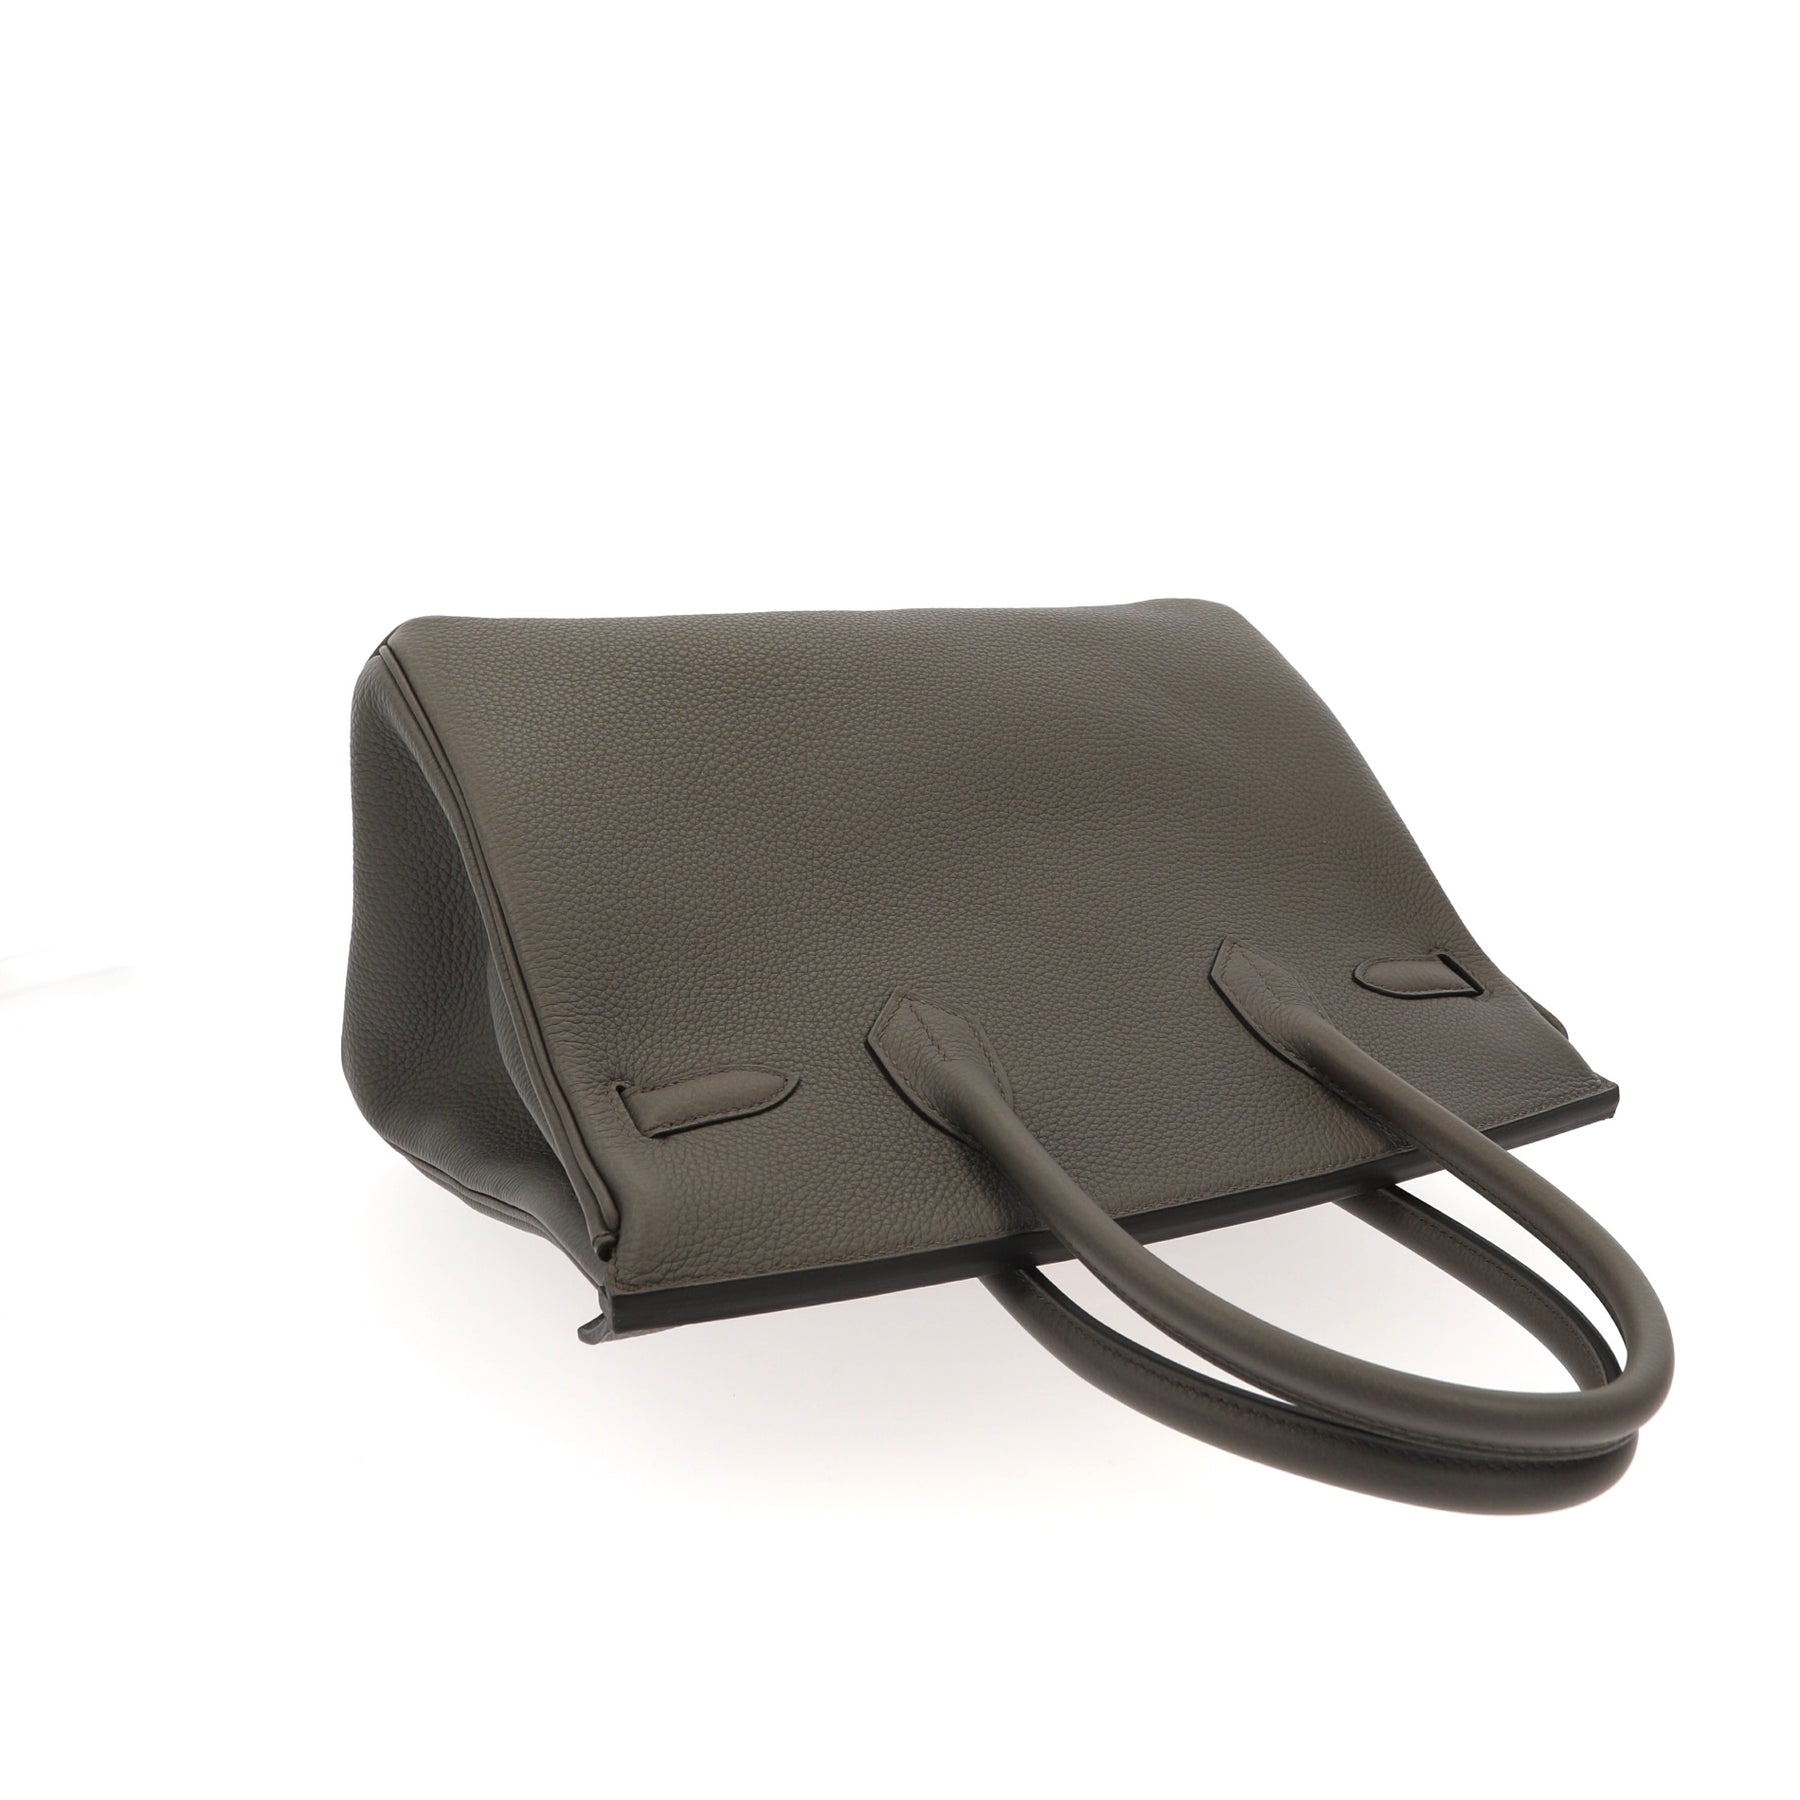 Hermès Birkin 30 Handbag in Etain color leather and Rose gold hardware –  Fancy Lux